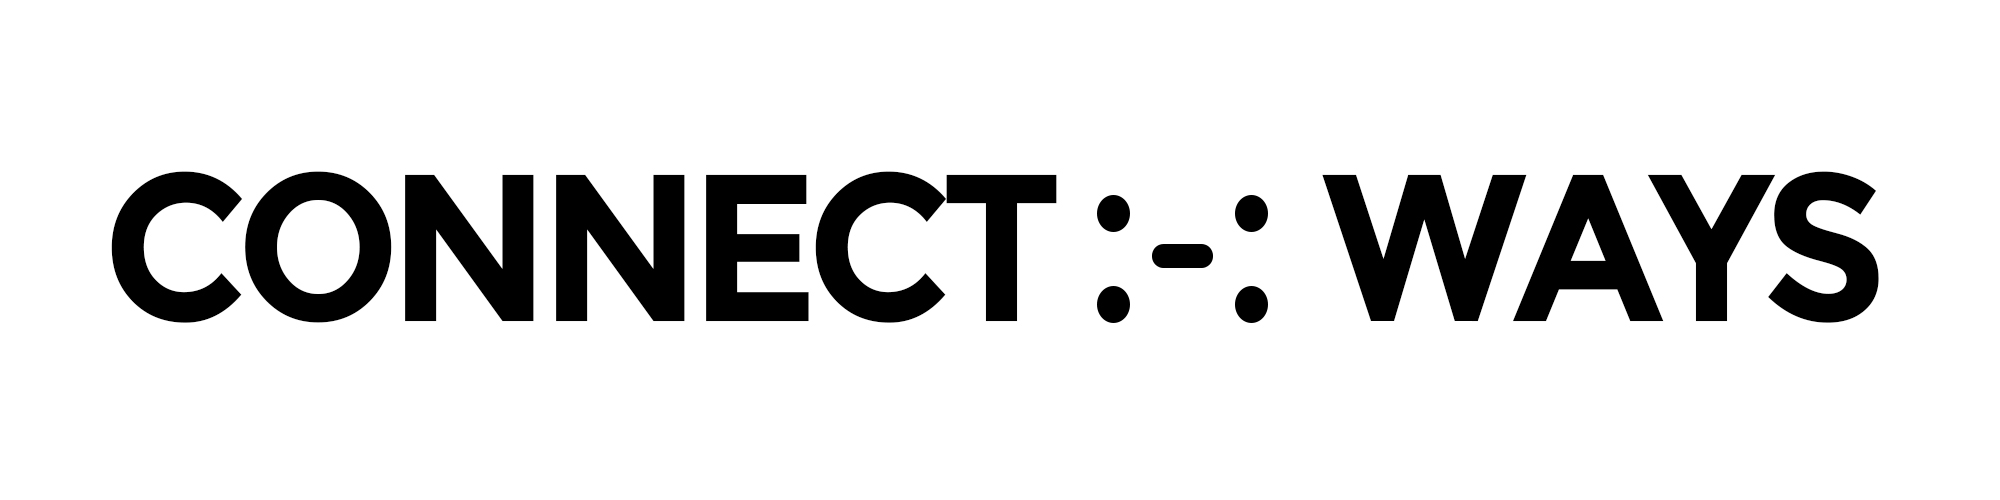 Connect Ways logo